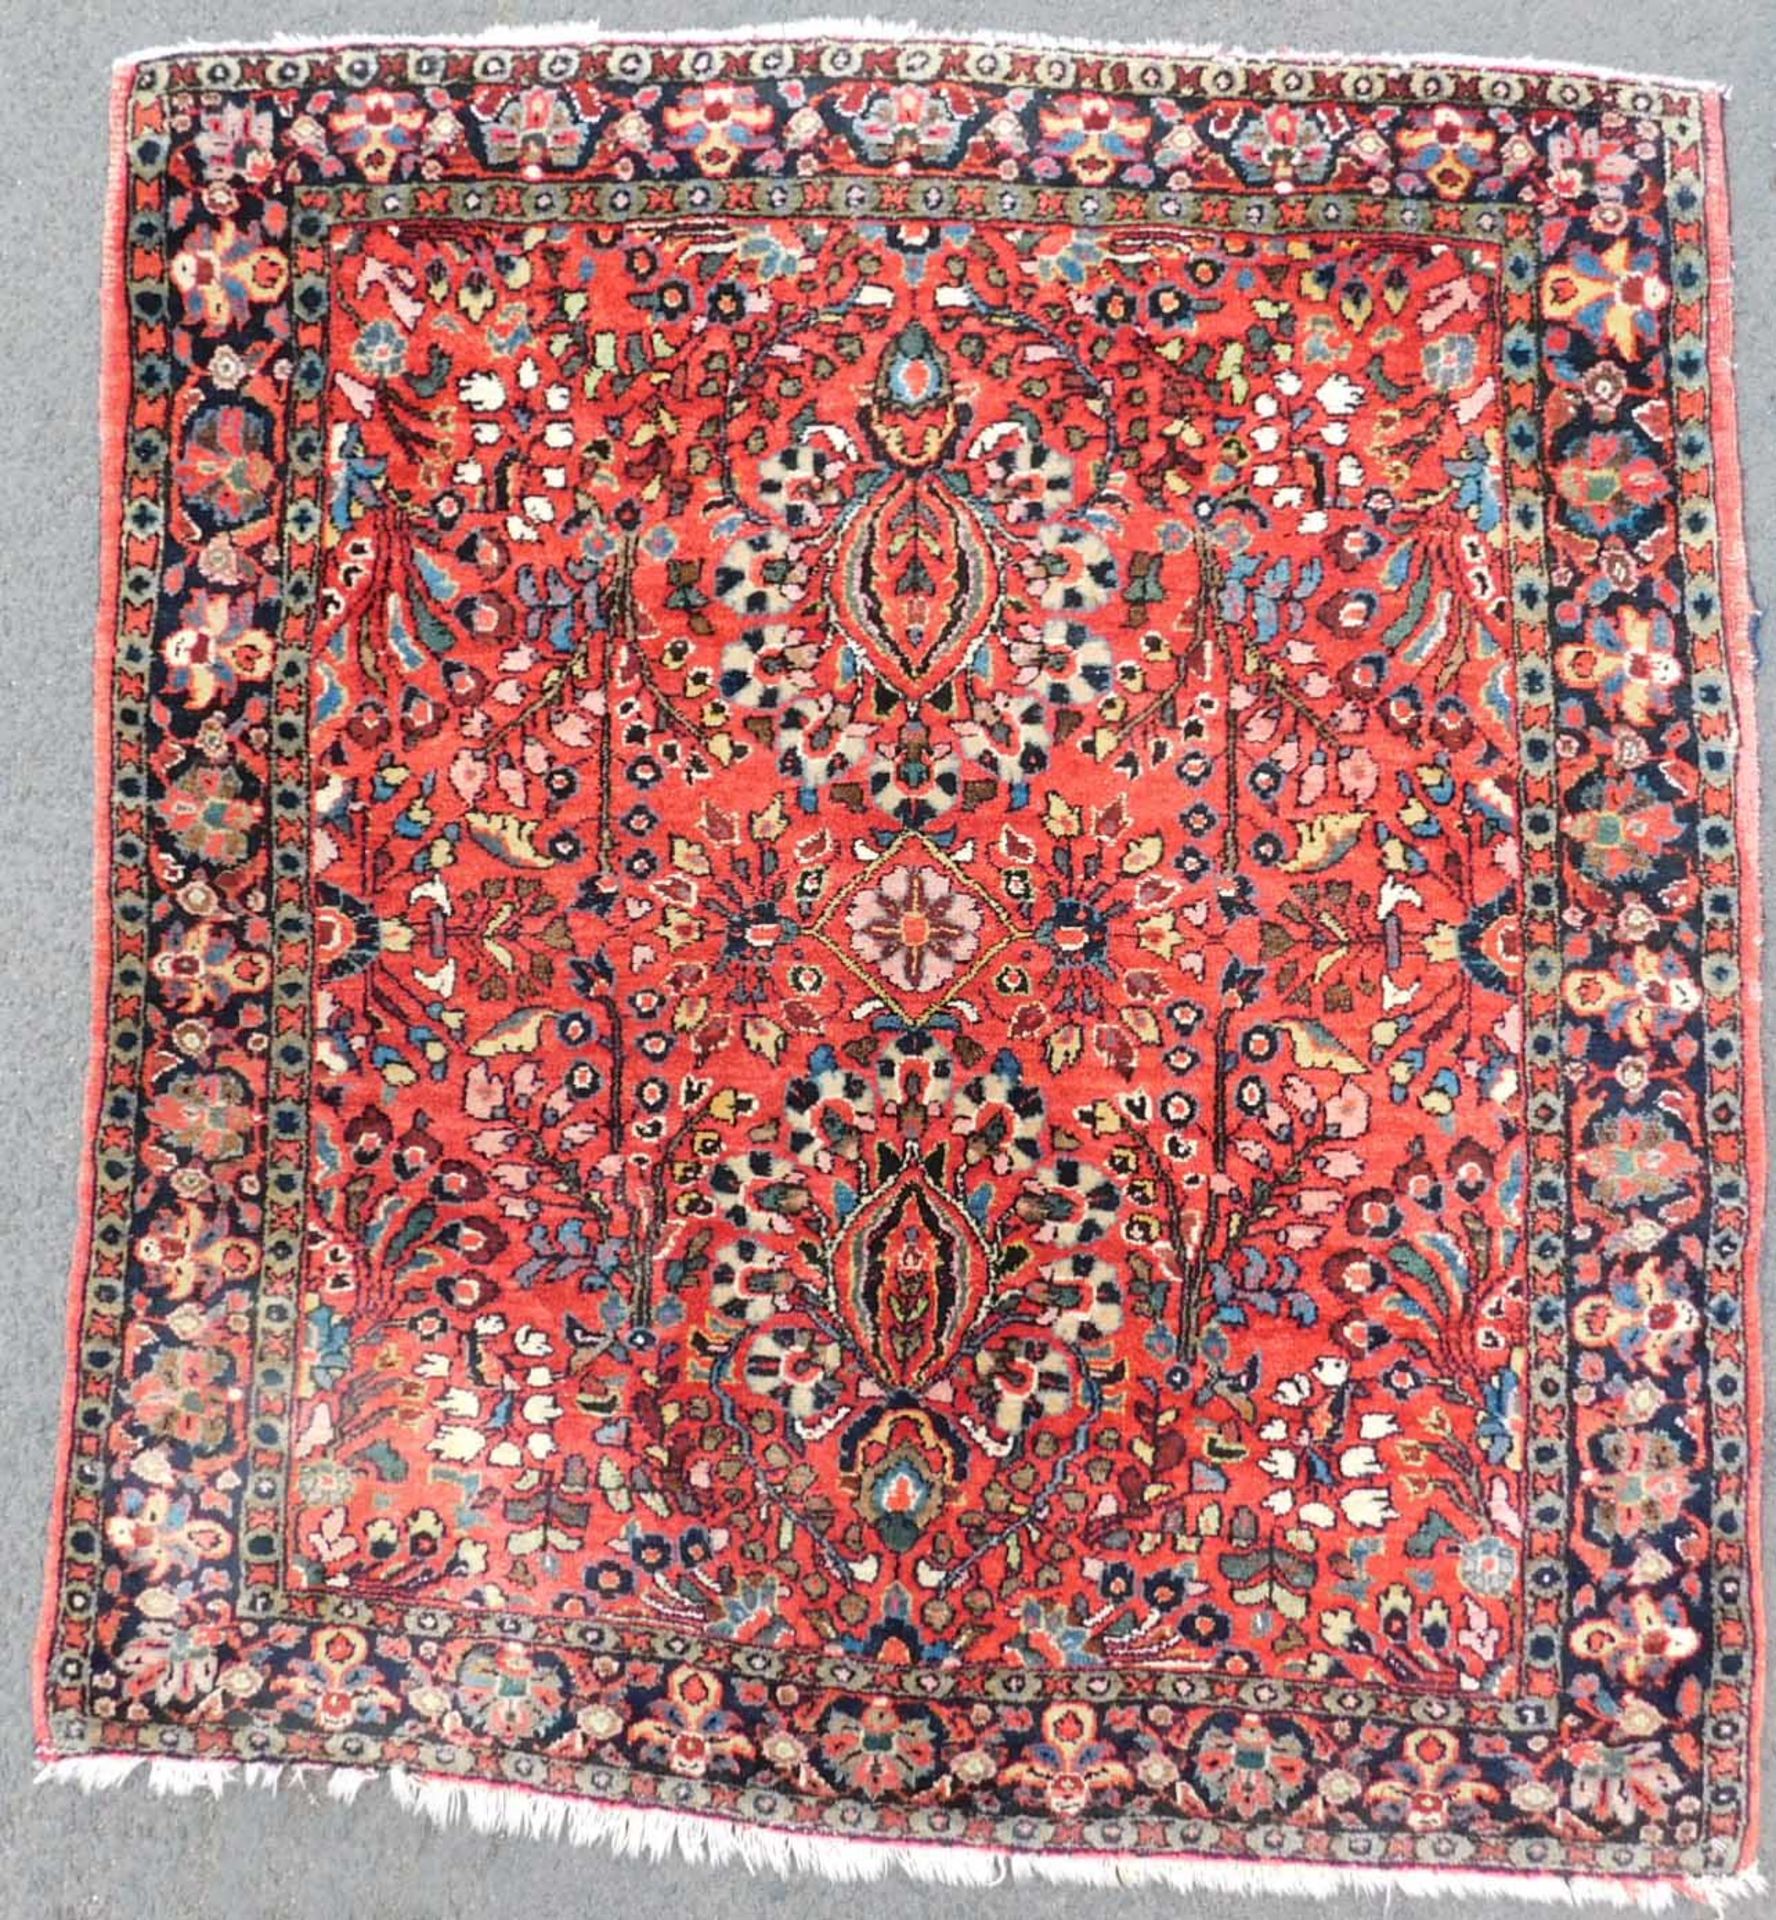 Saruk Persian carpet. Iran. "American Saruk". Around 90-110 years old.